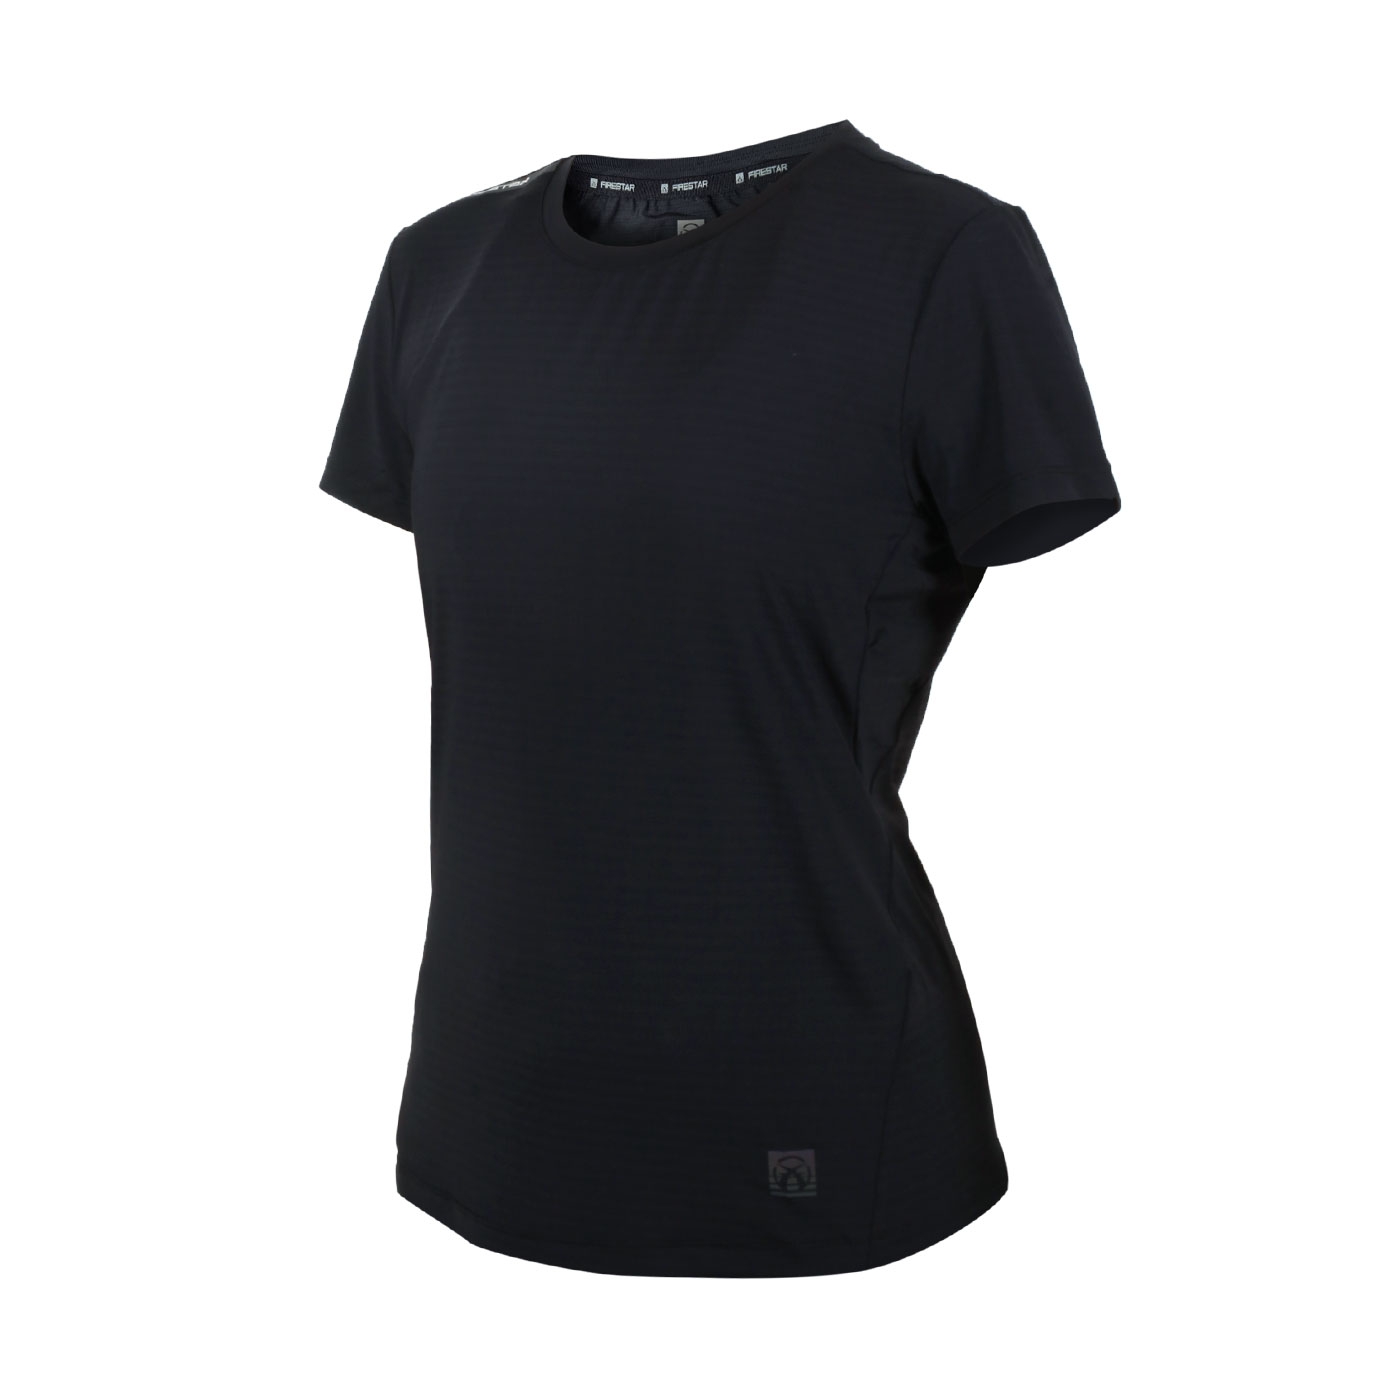 FIRESTAR 女款彈性圓領短袖T恤 DL262-10